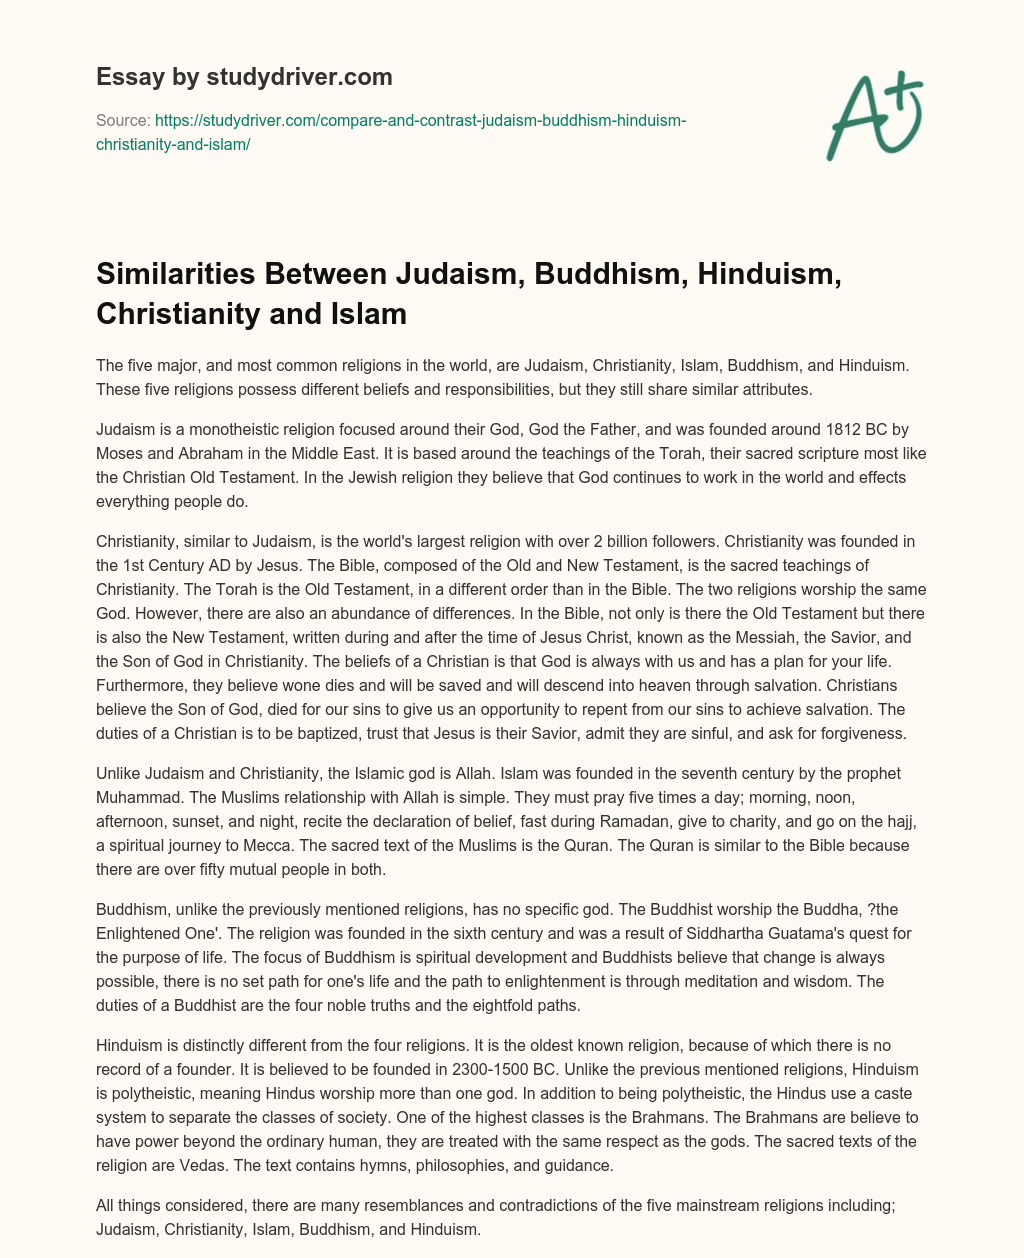 Similarities between Judaism, Buddhism, Hinduism, Christianity and Islam essay